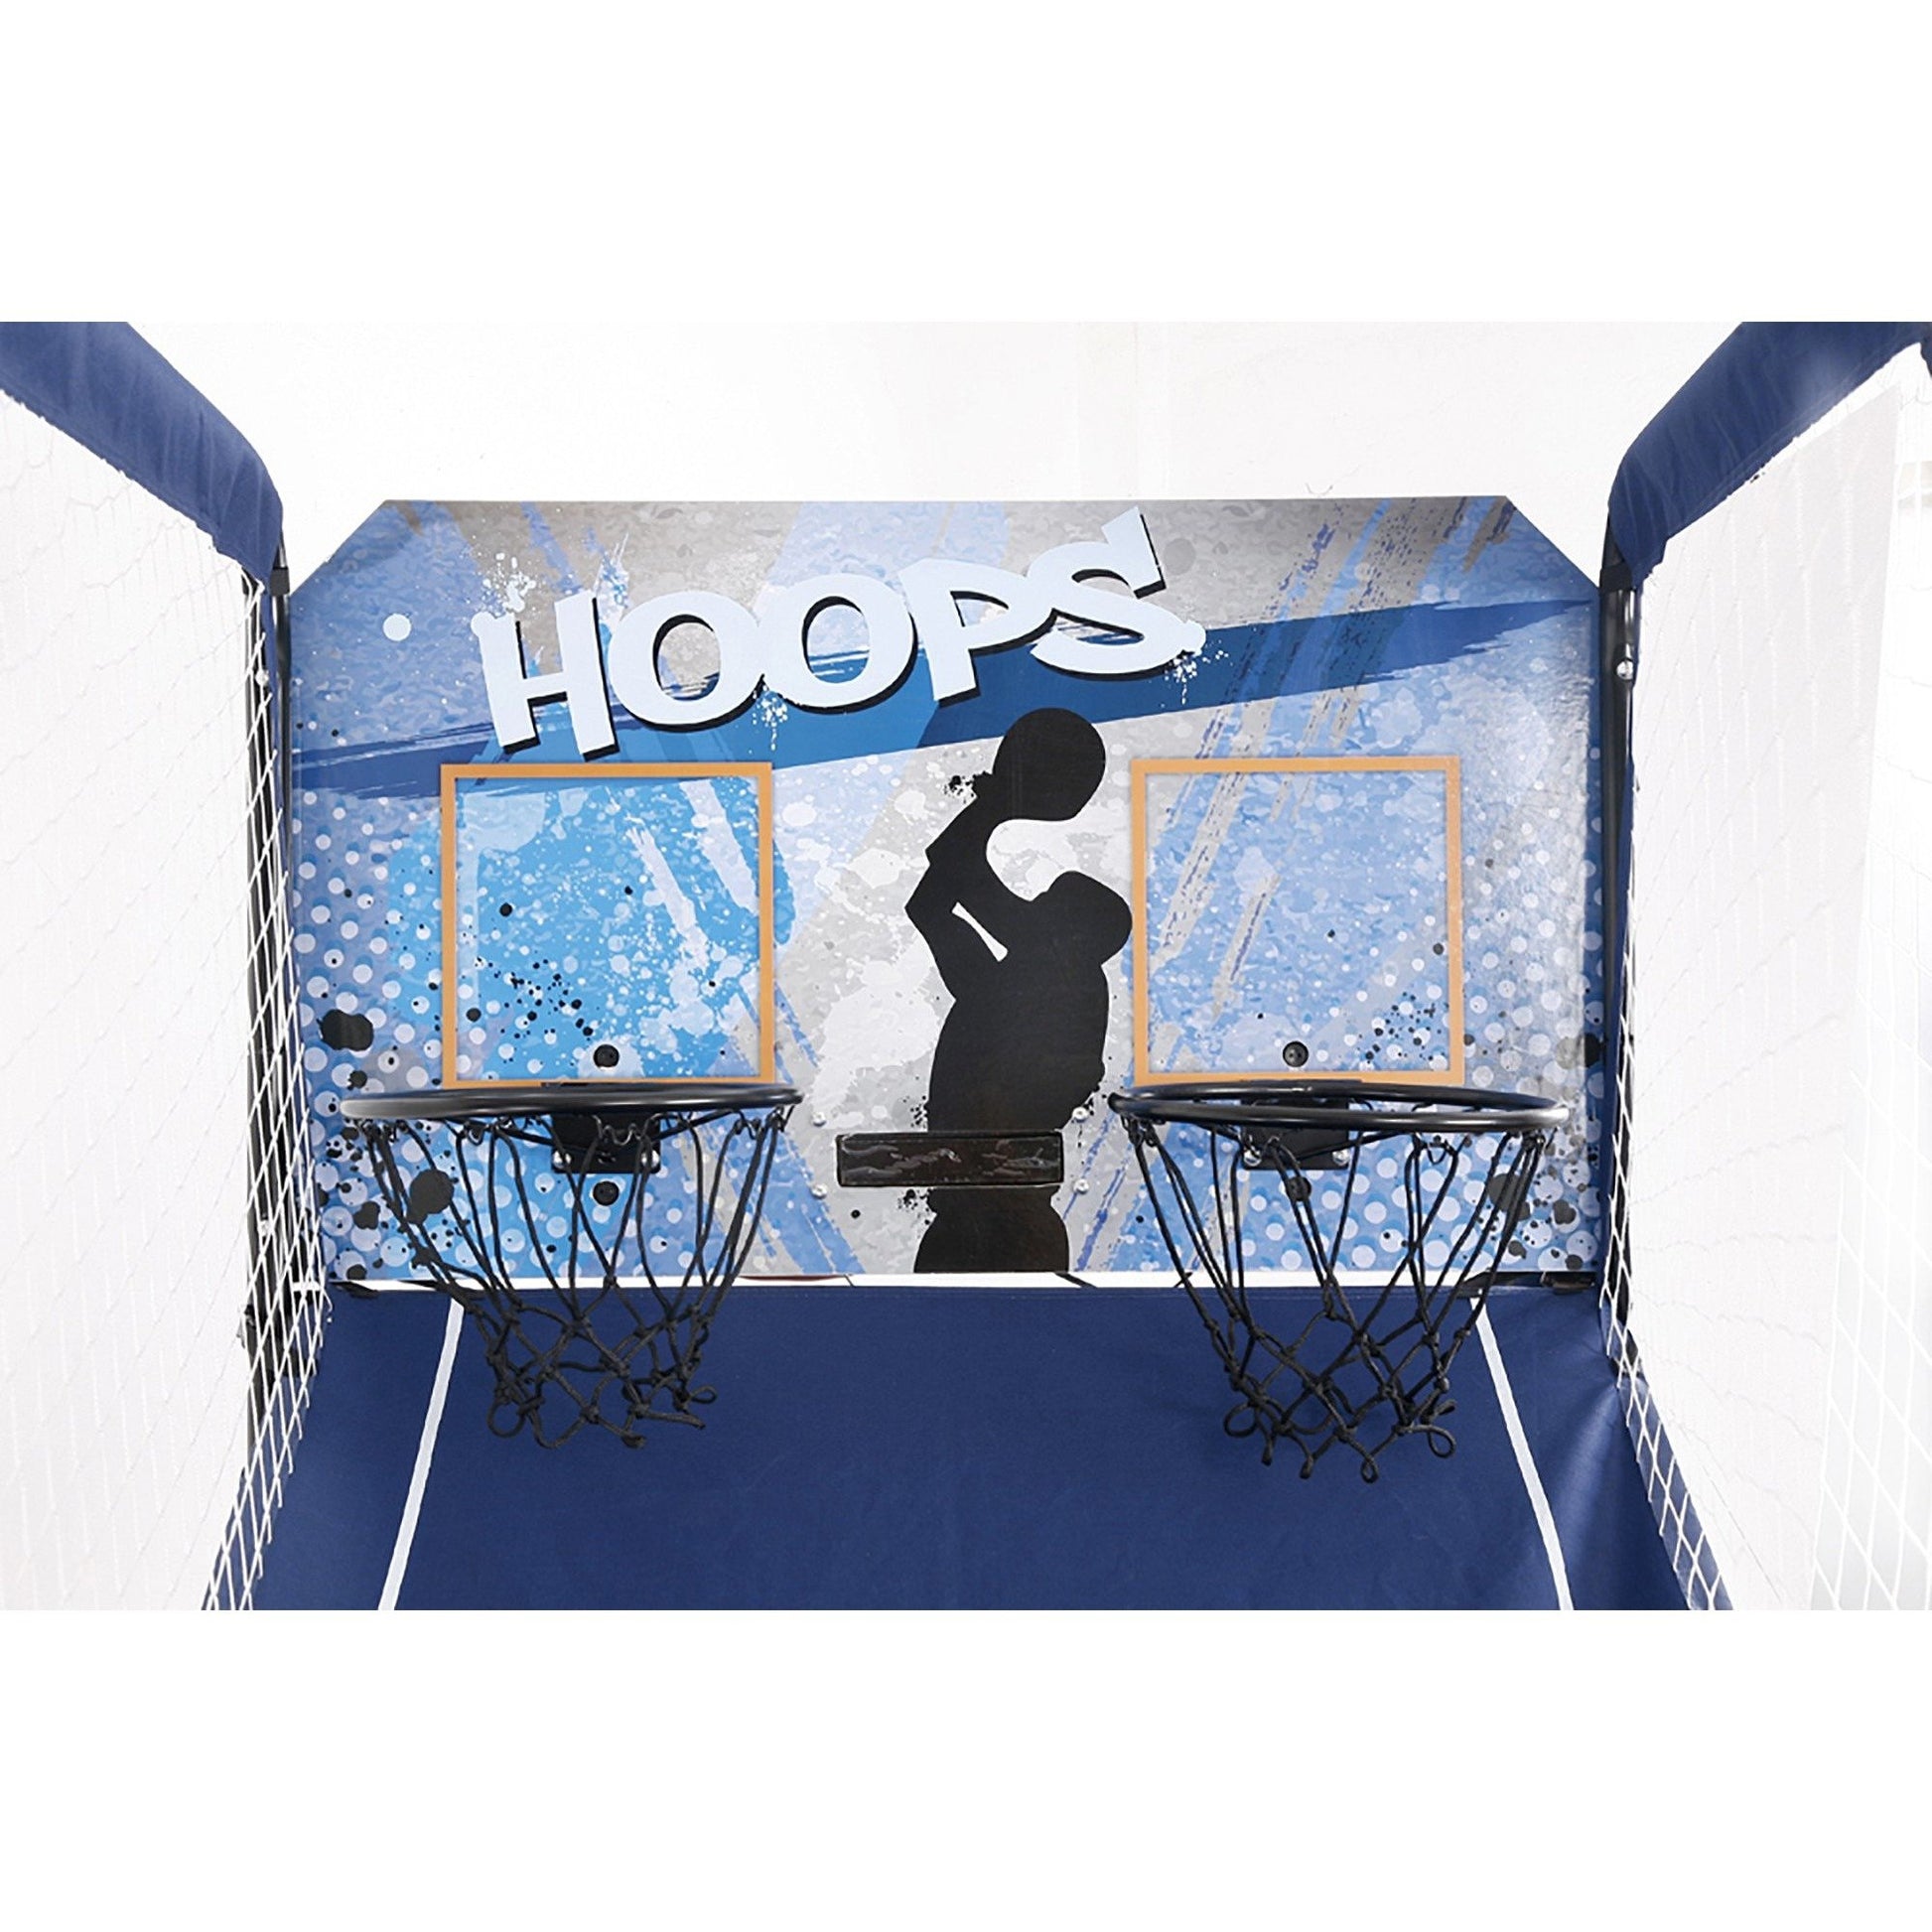 Hathaway Dual Hoops Basketball Arcade Game - Gaming Blaze